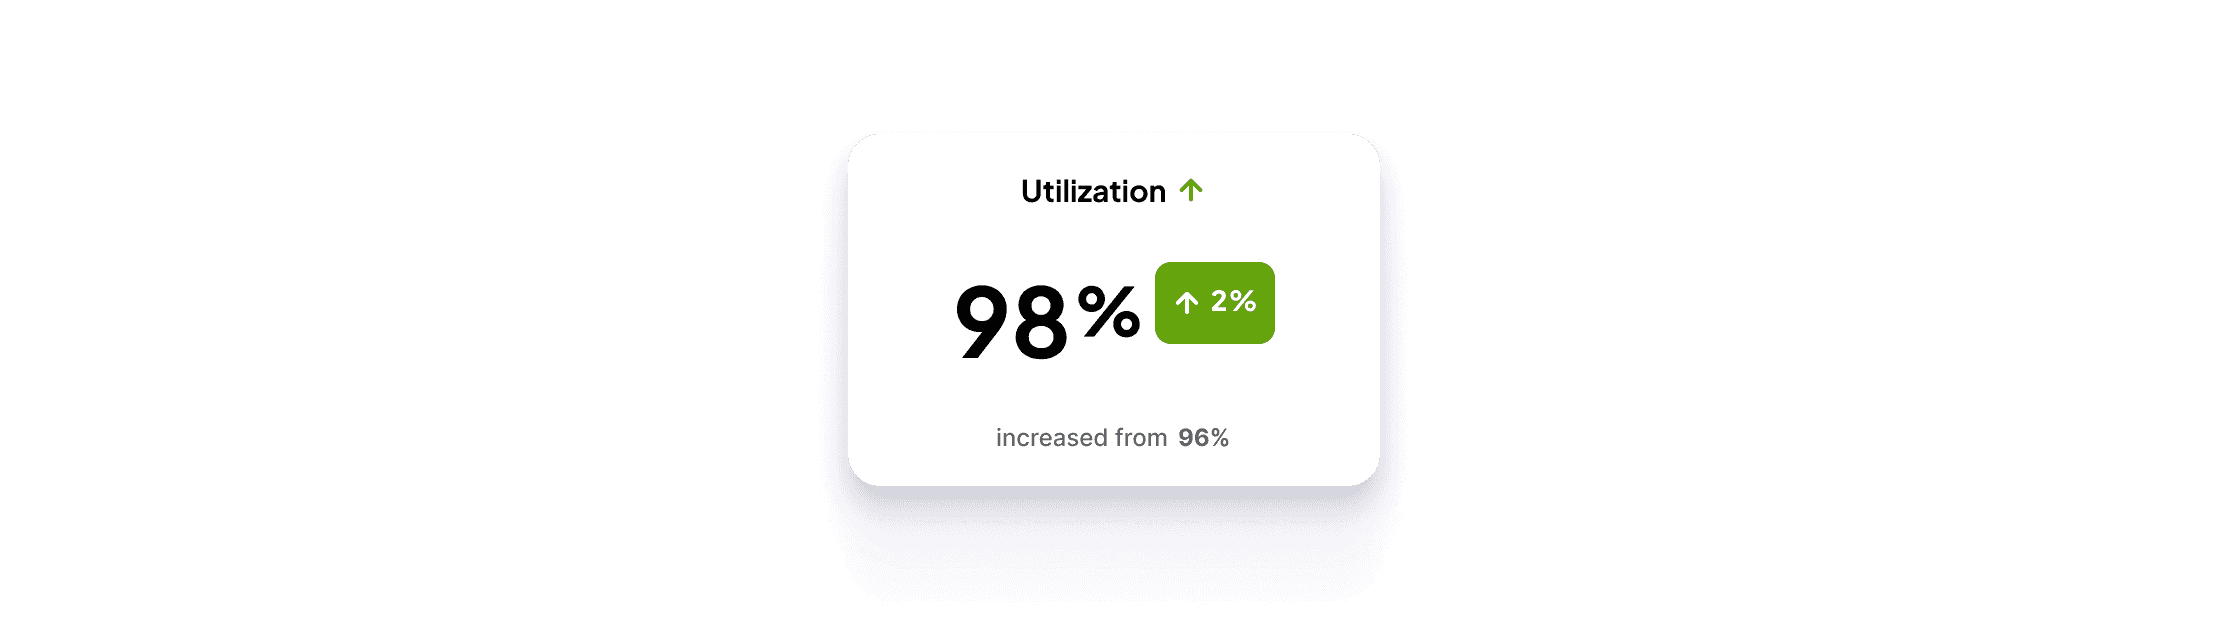 Utilization goes up